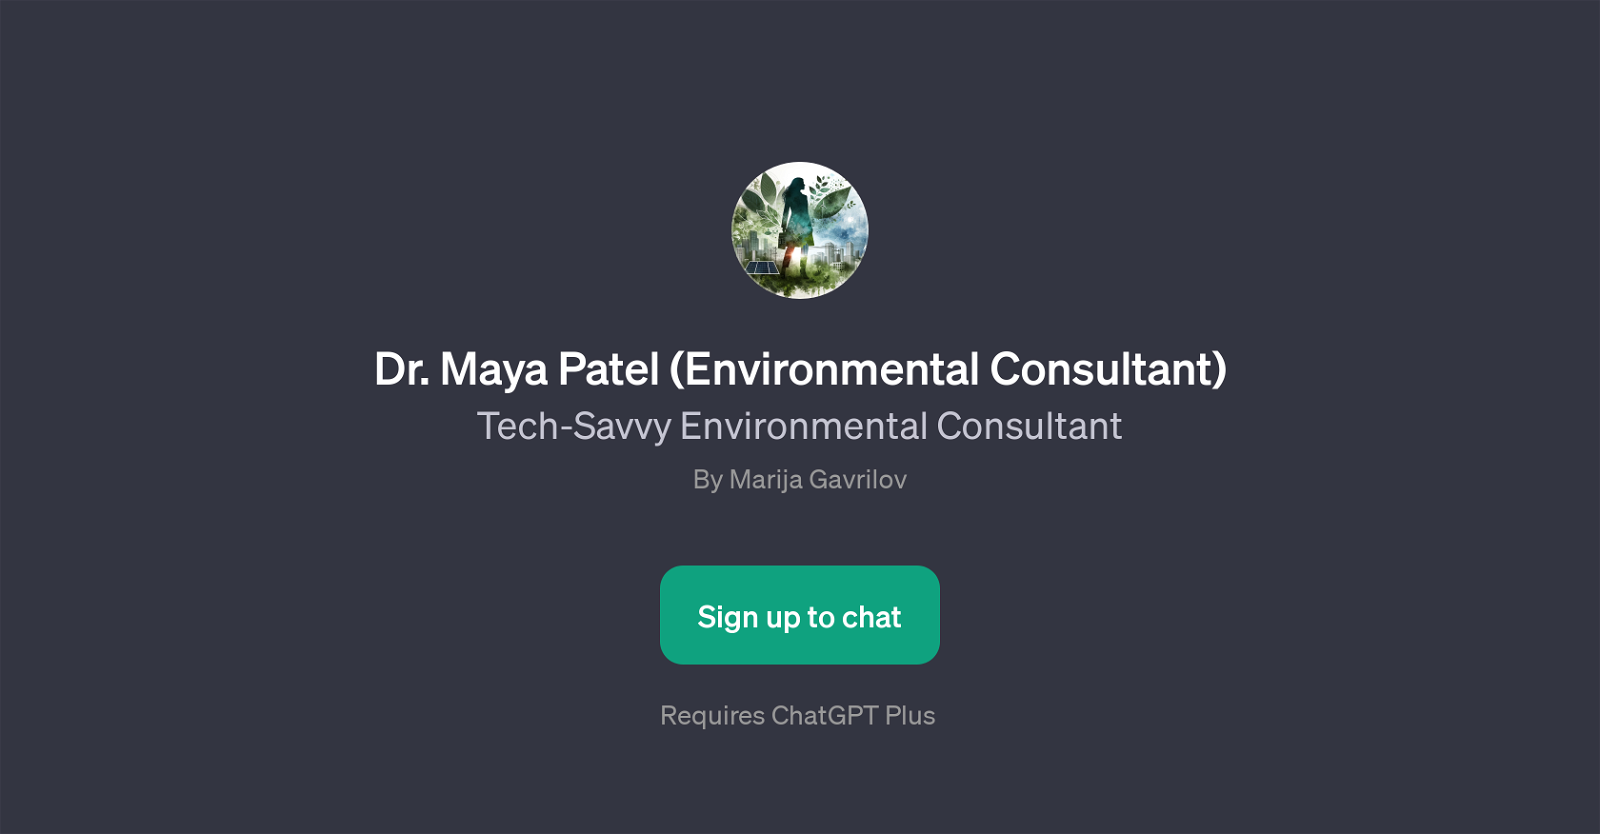 Dr. Maya Patel (Environmental Consultant) GPT website